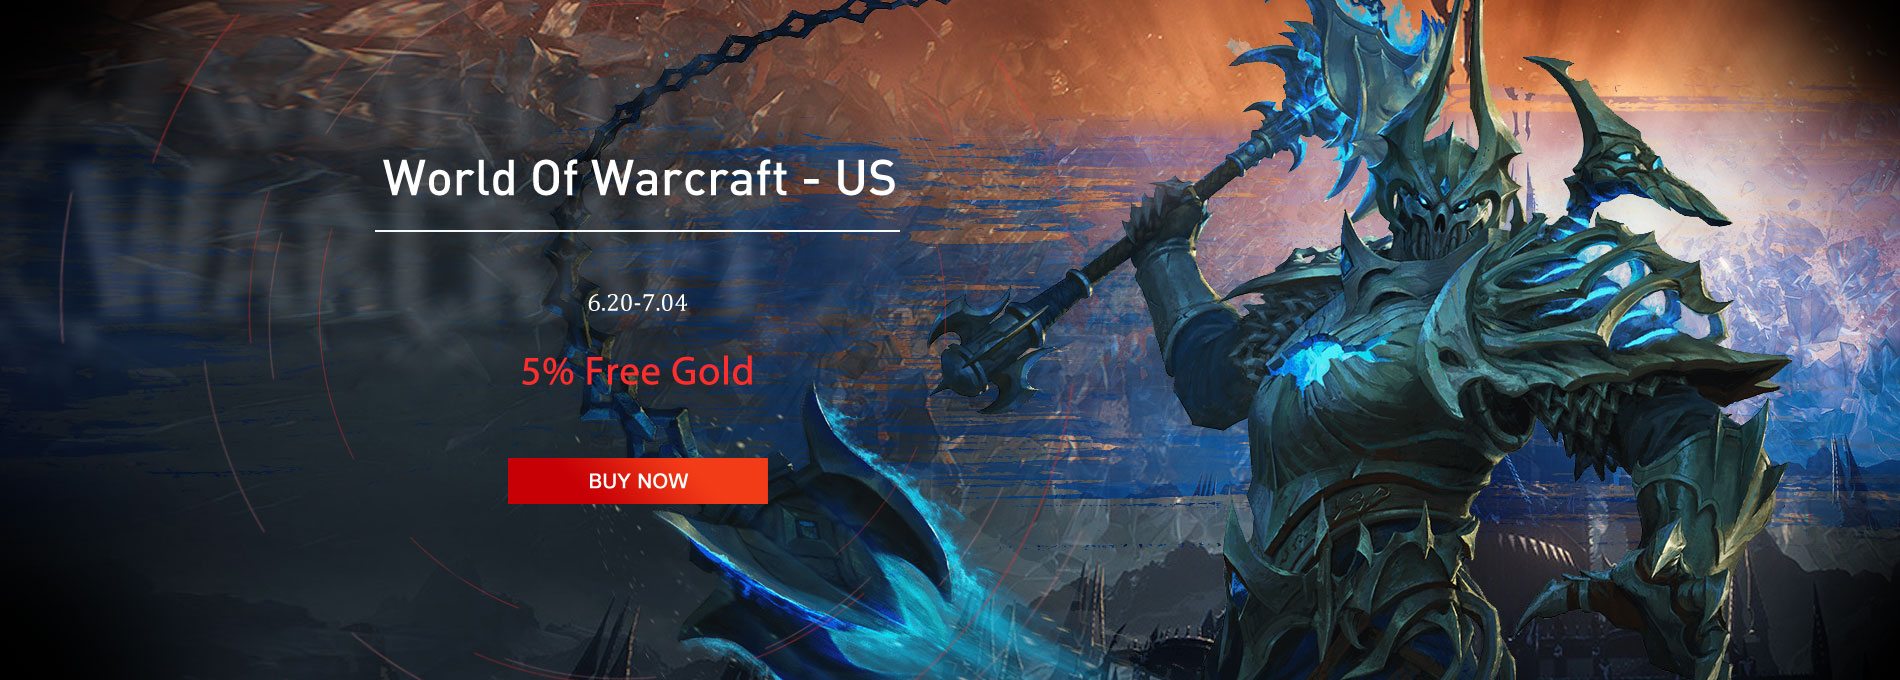 World of Warcraft-US